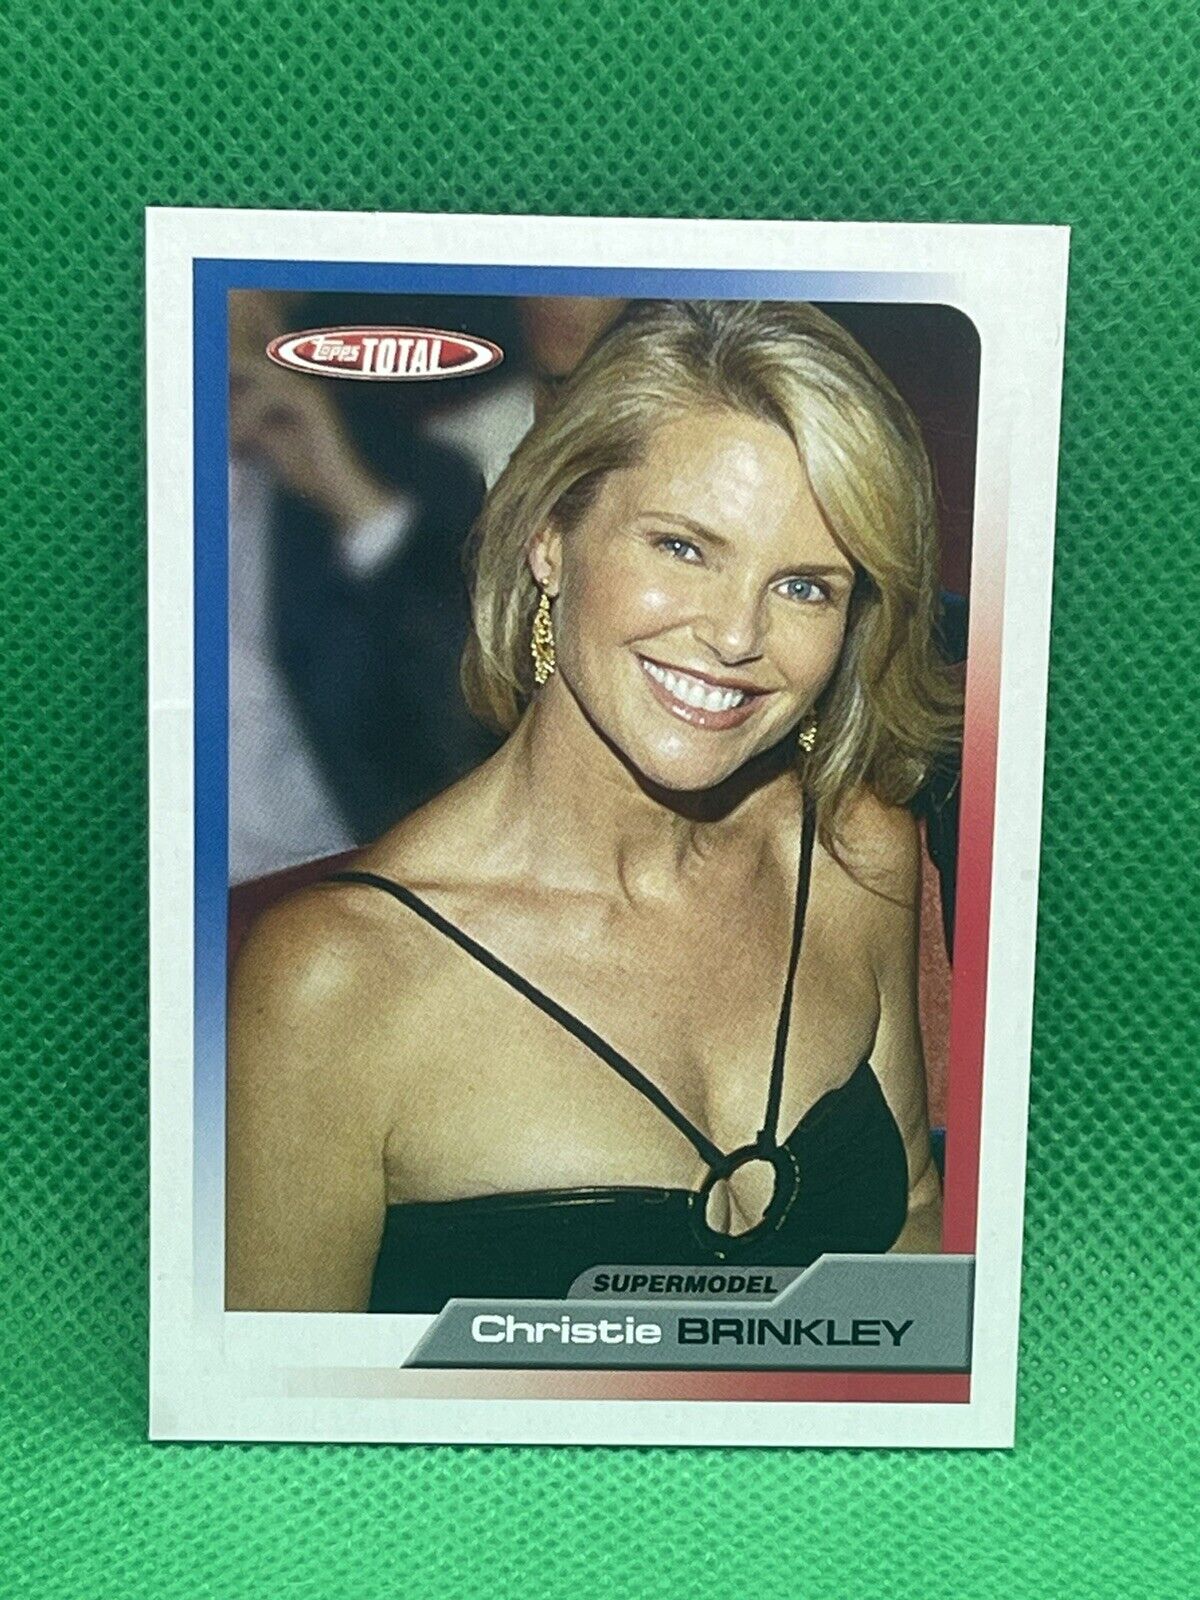 2005-06 Topps Total Celebrity #437 Supermodel Christie Brinkley